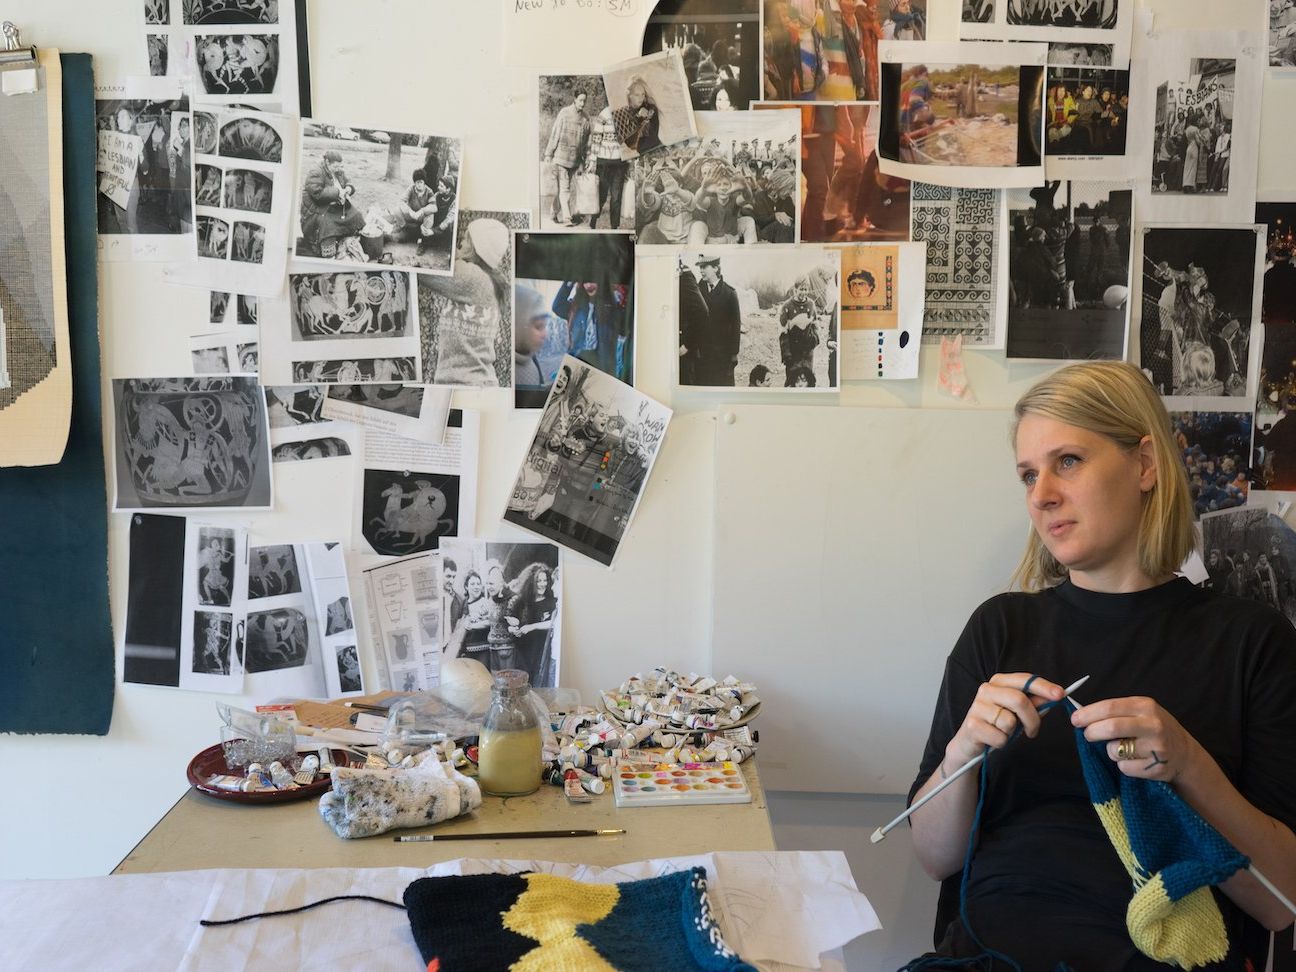 Ellen Lesperance Merges Knitting With Paint to Extend Activist